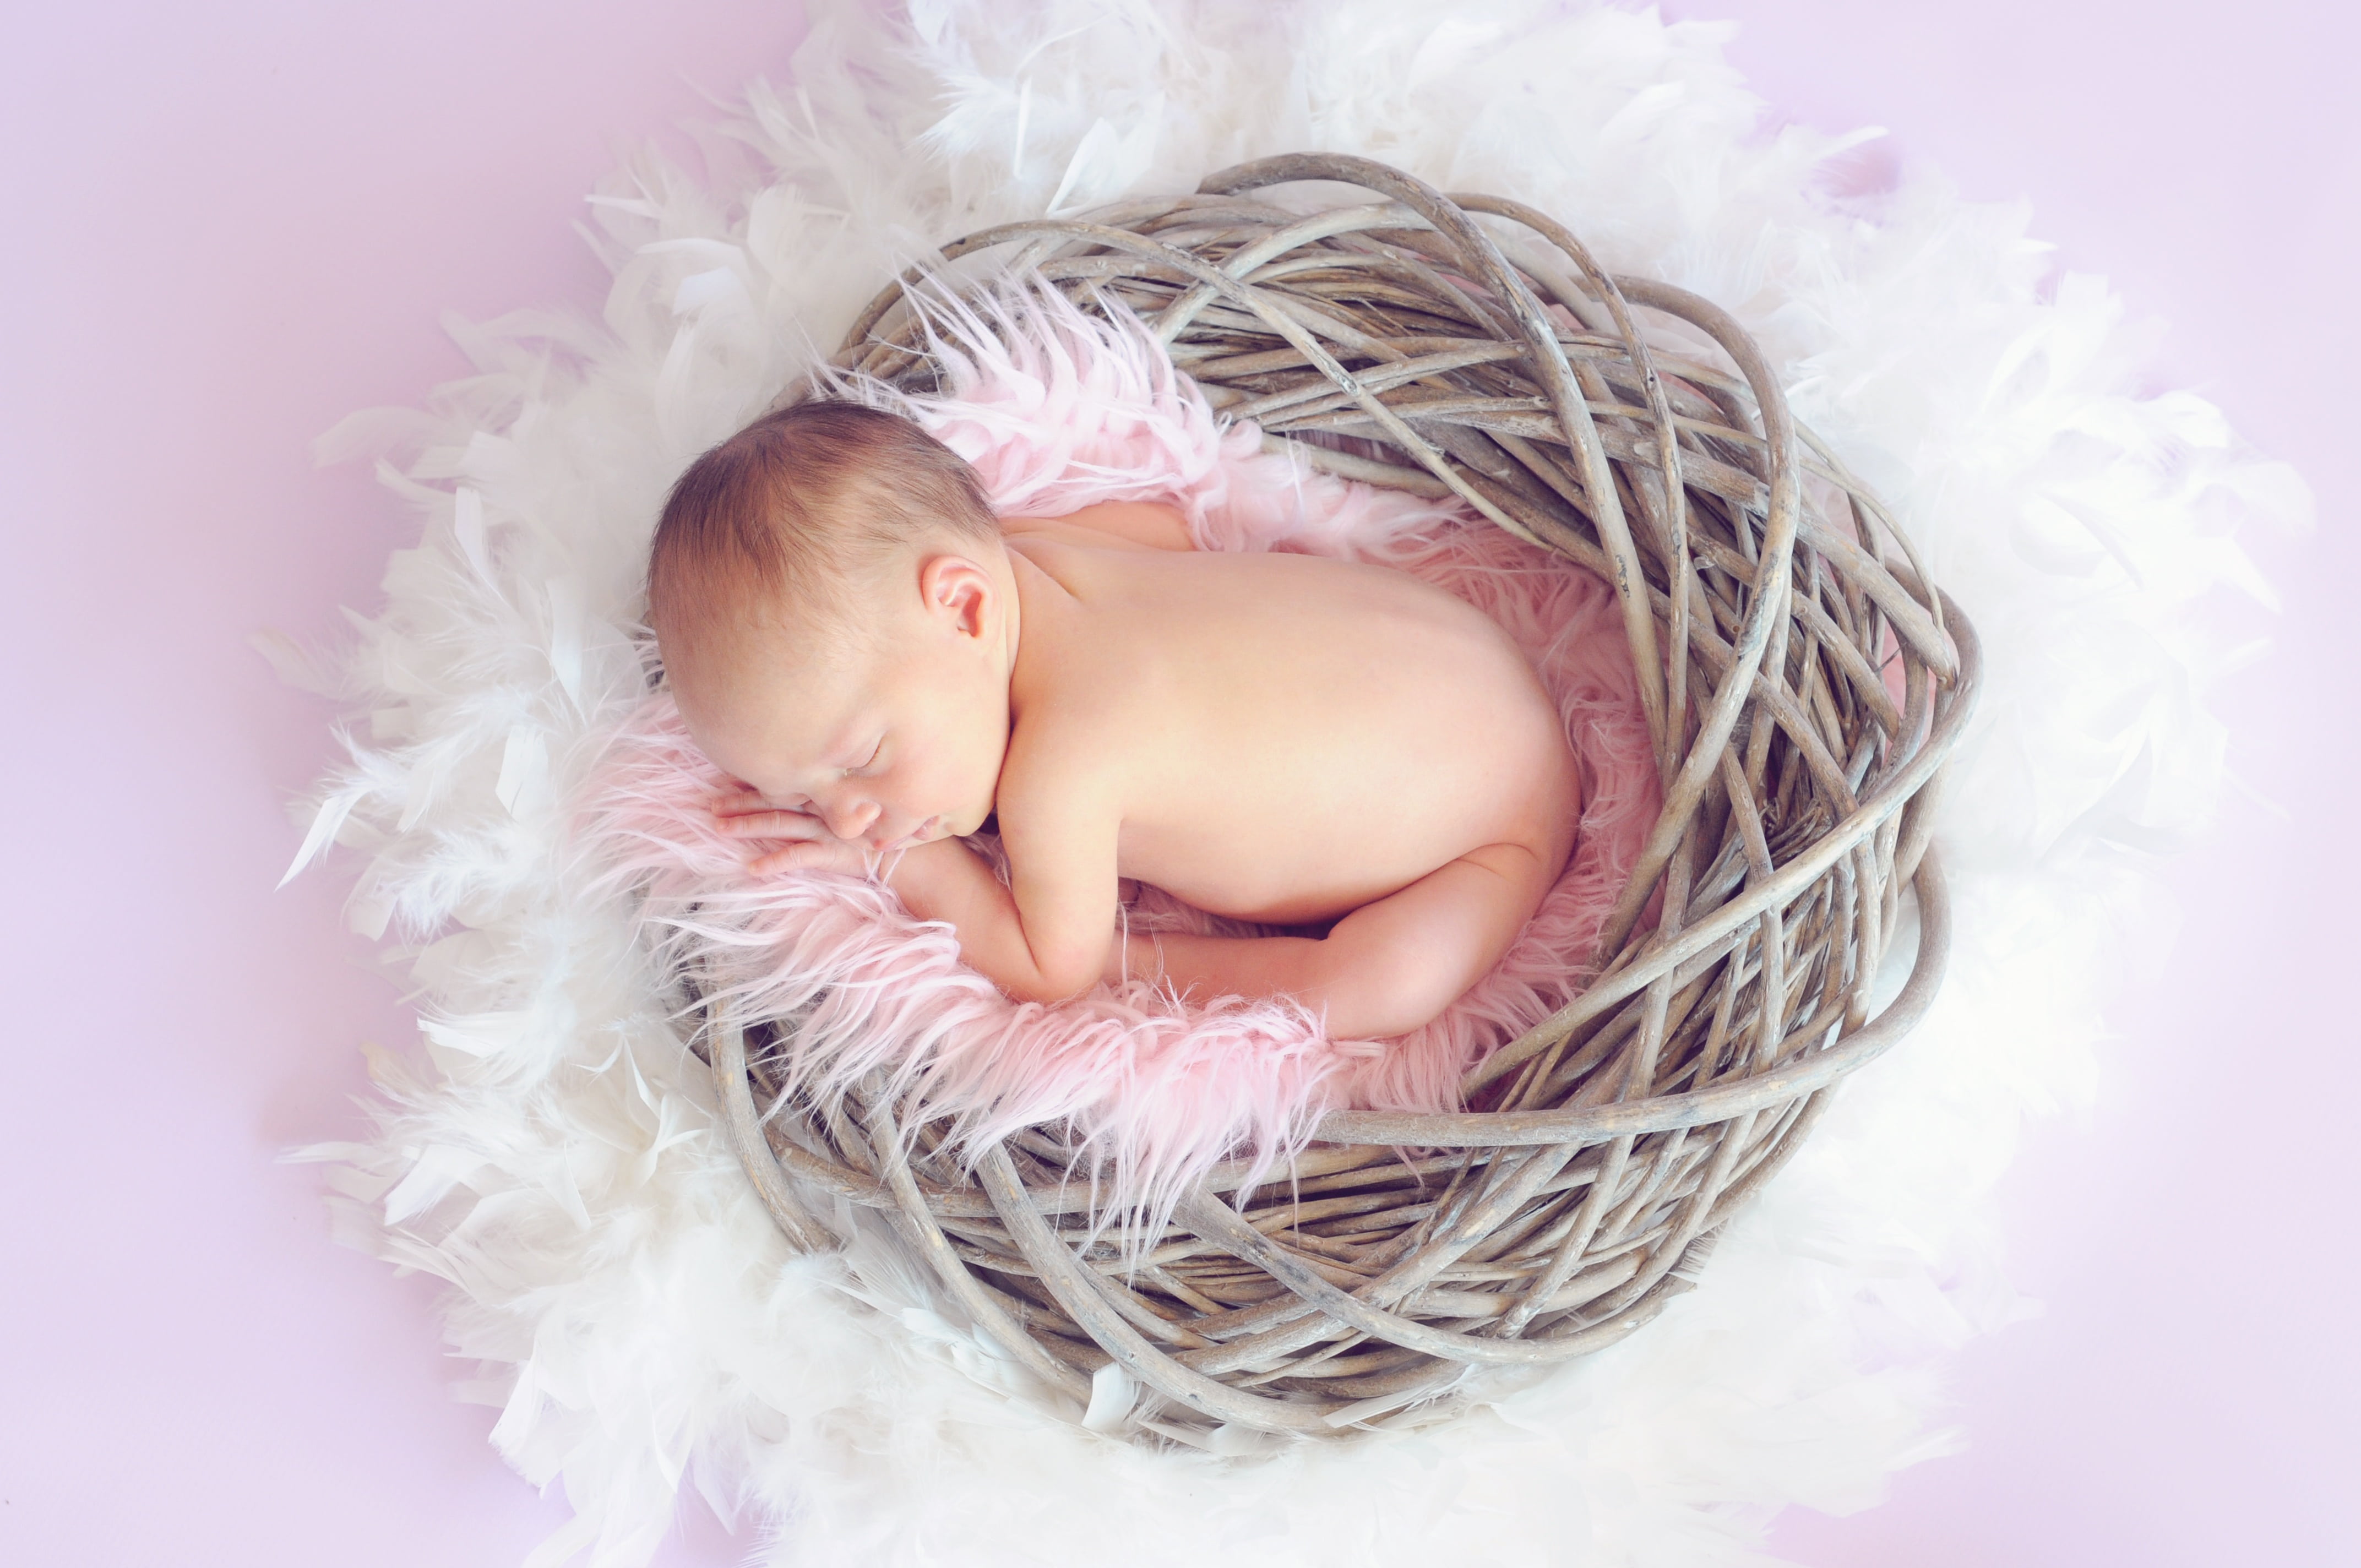 baby on pink nest sleeping, sleeping baby, baby girl, child, newborn